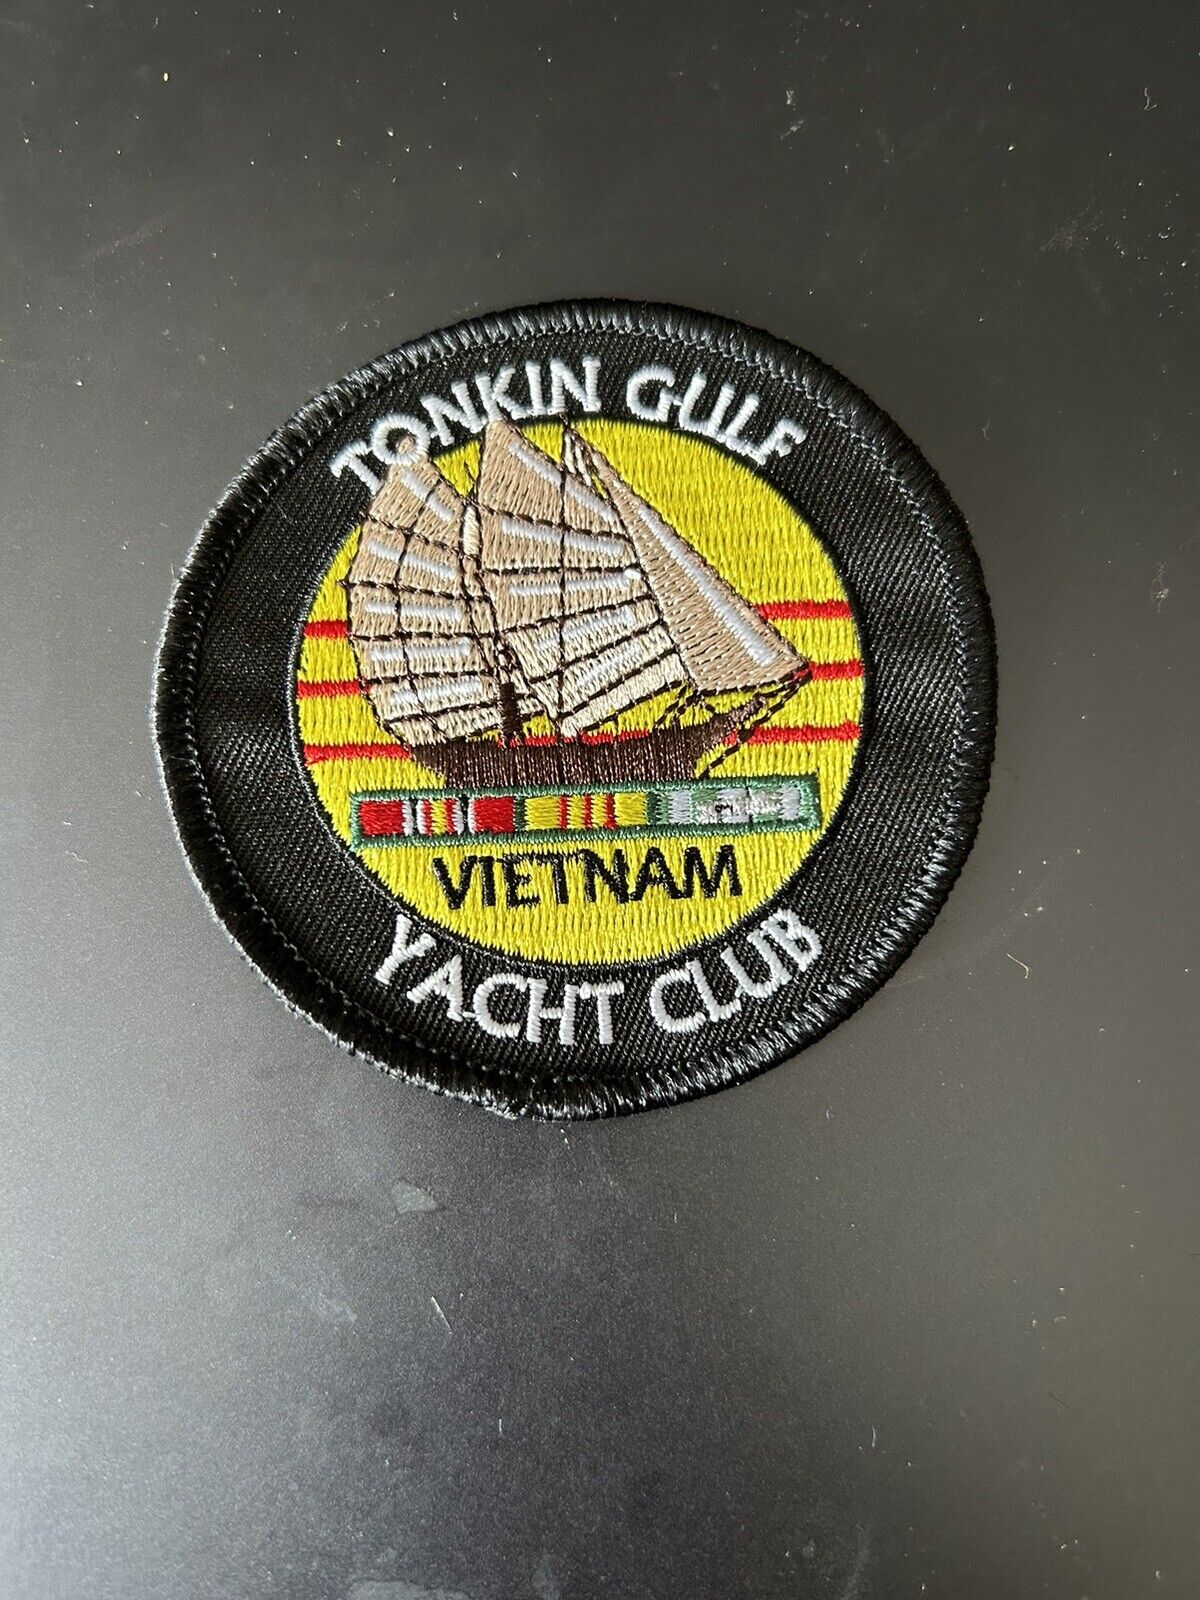 Tonkin Gulf Yacht Club Patch (Vietnam Service)